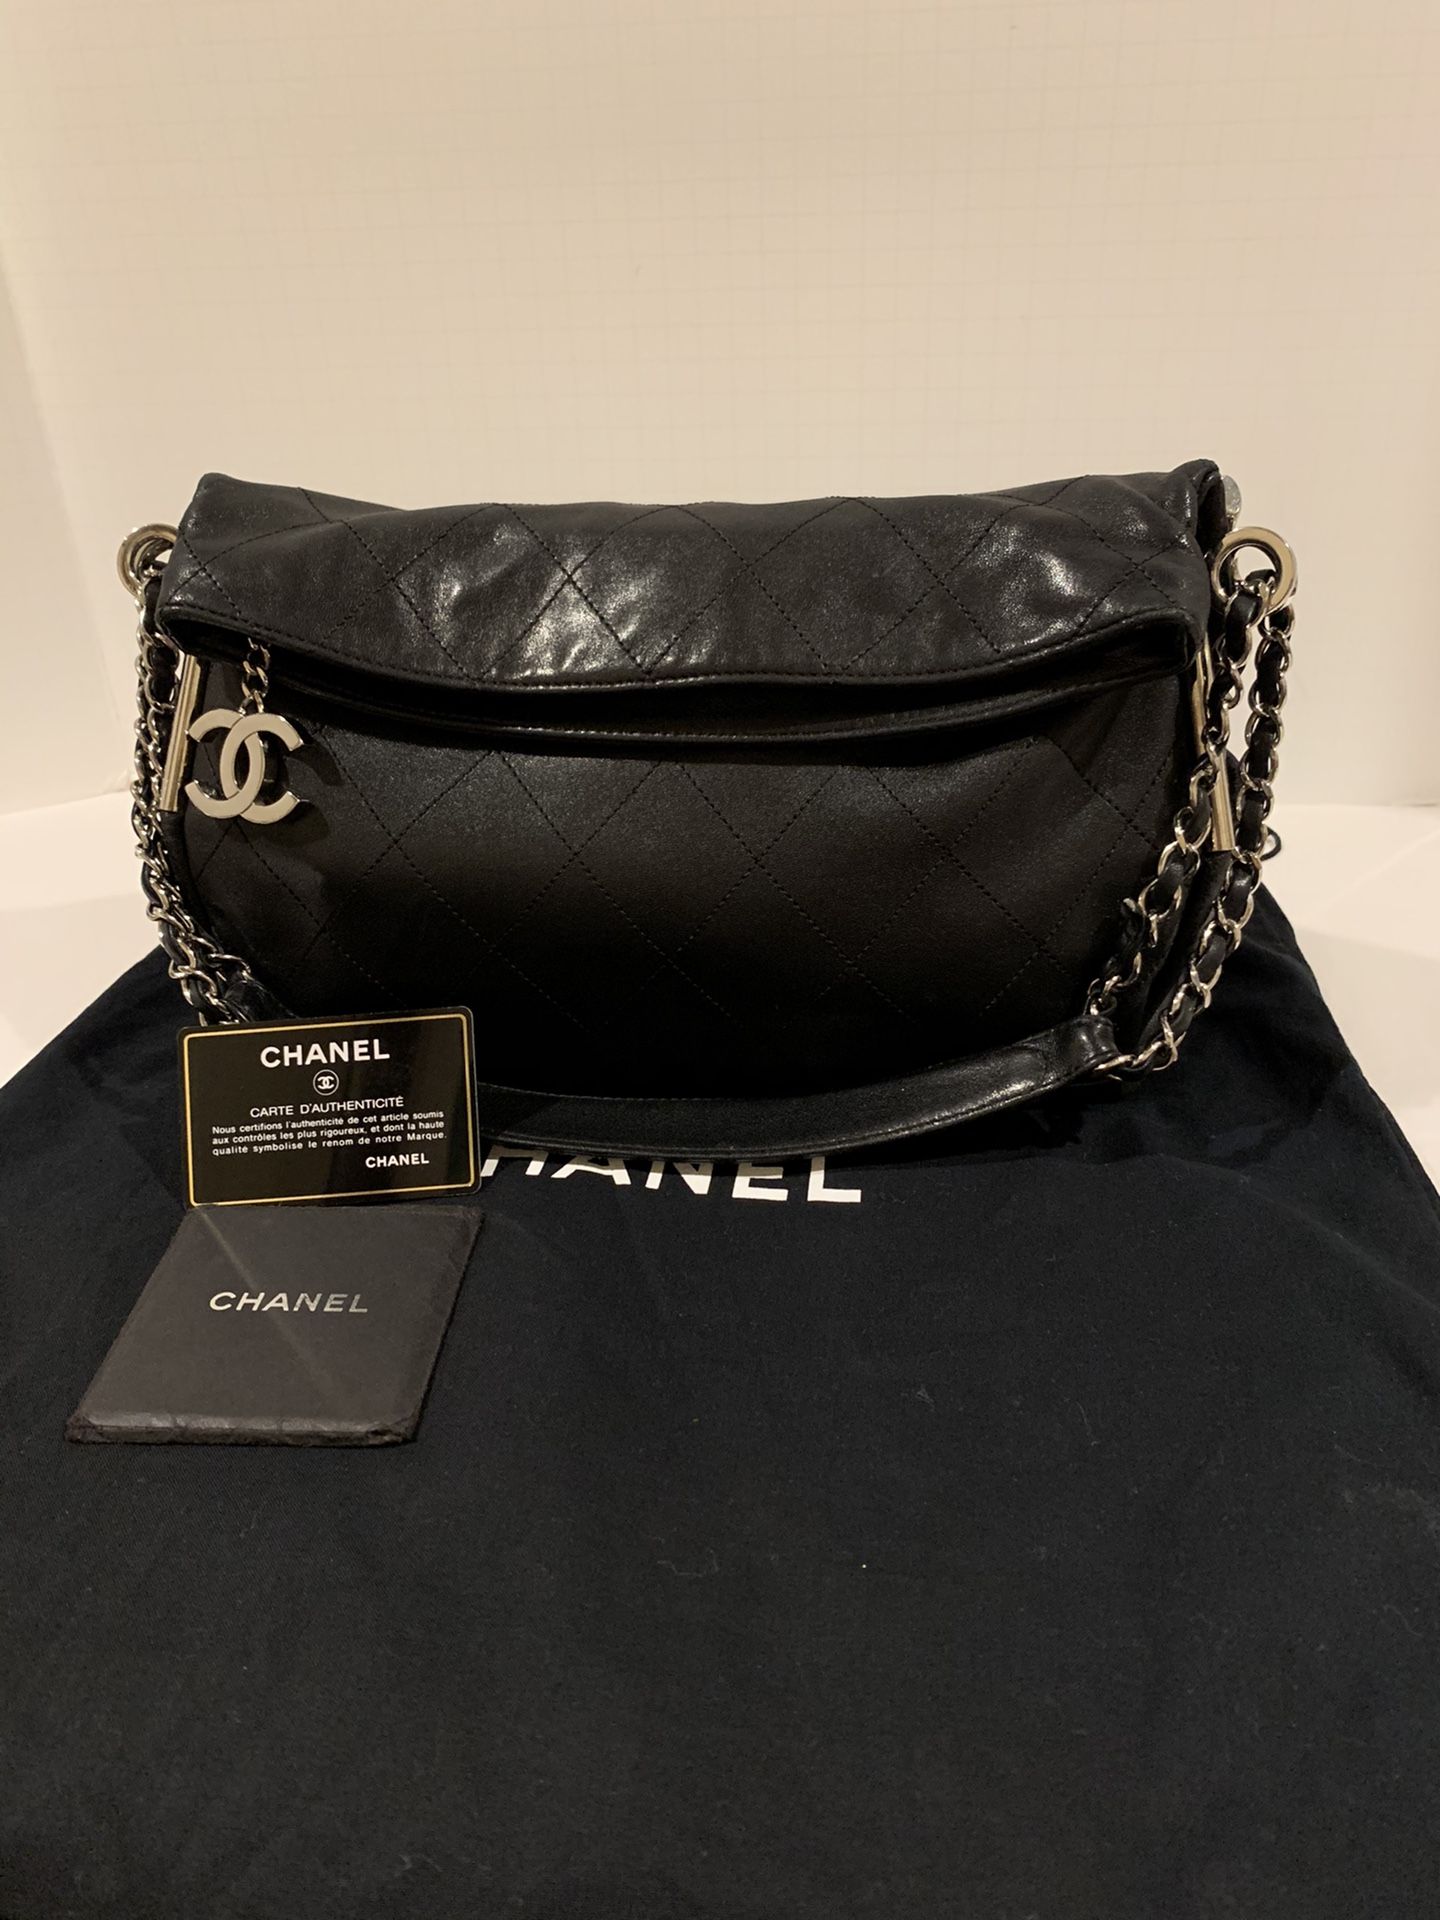 Chanel Sac Camera Lambskin Shoulder/ Hobo Bag AUTHENTIC LIKE NEW